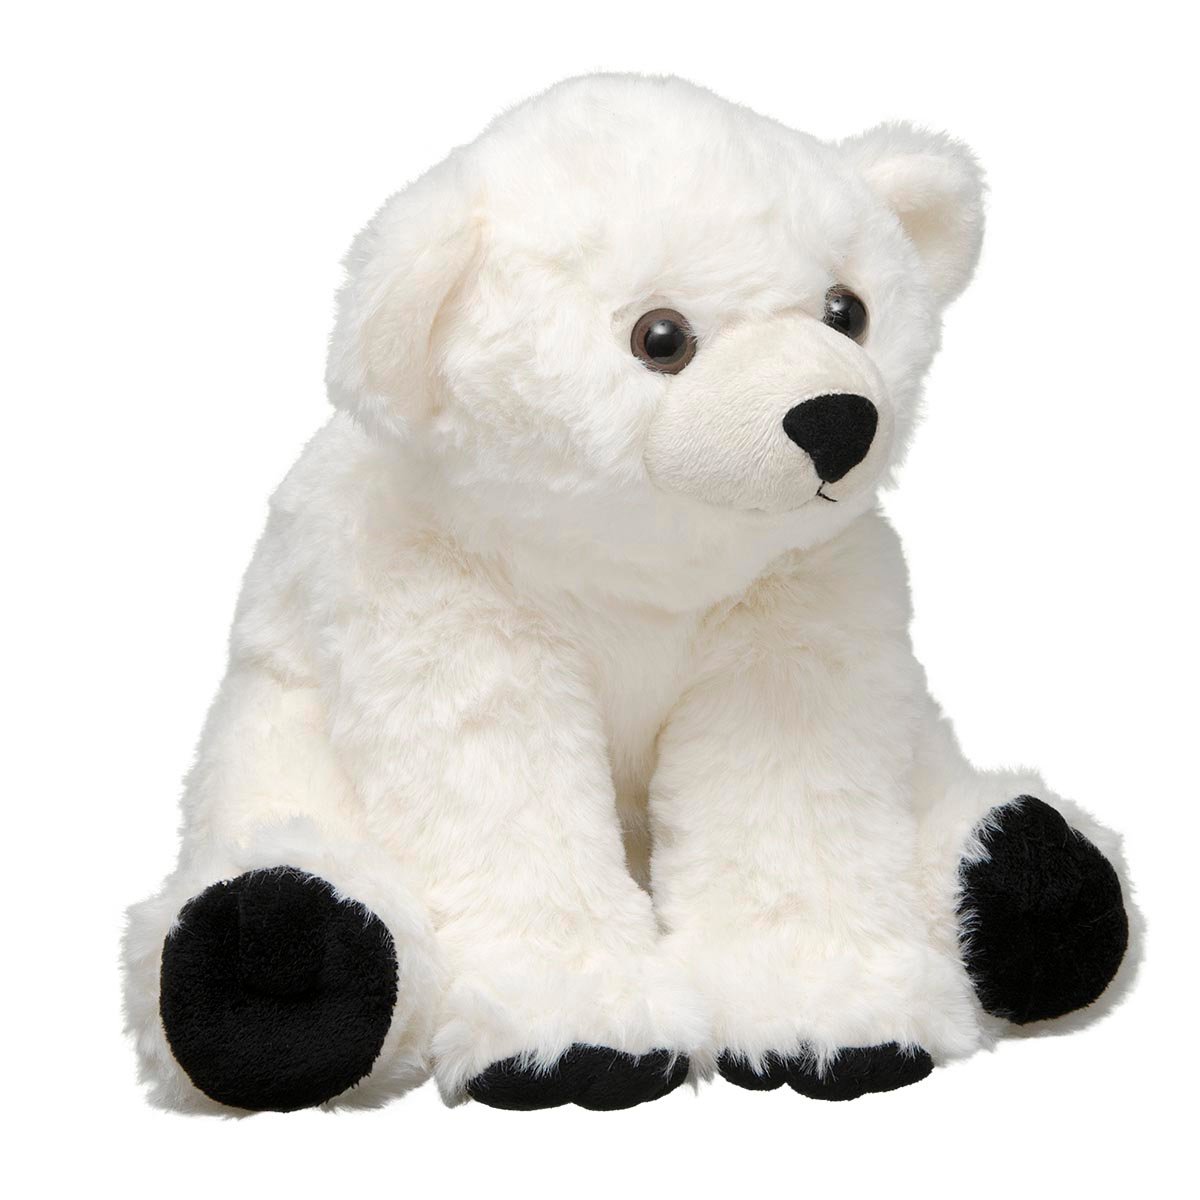 Adopt A Polar Bear Symbolic Animal Adoptions From Wwf